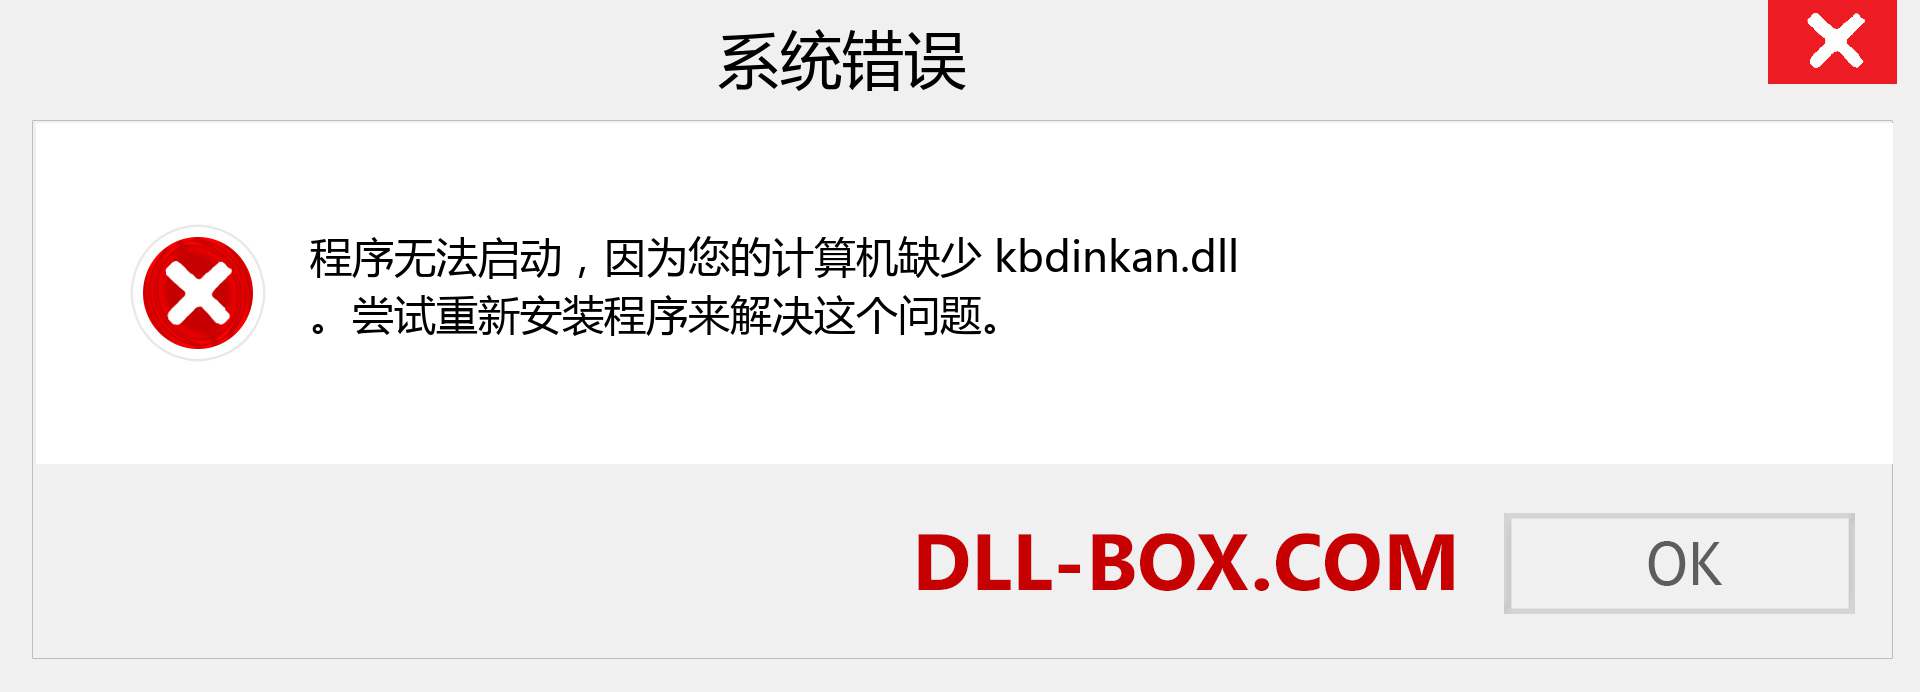 kbdinkan.dll 文件丢失？。 适用于 Windows 7、8、10 的下载 - 修复 Windows、照片、图像上的 kbdinkan dll 丢失错误